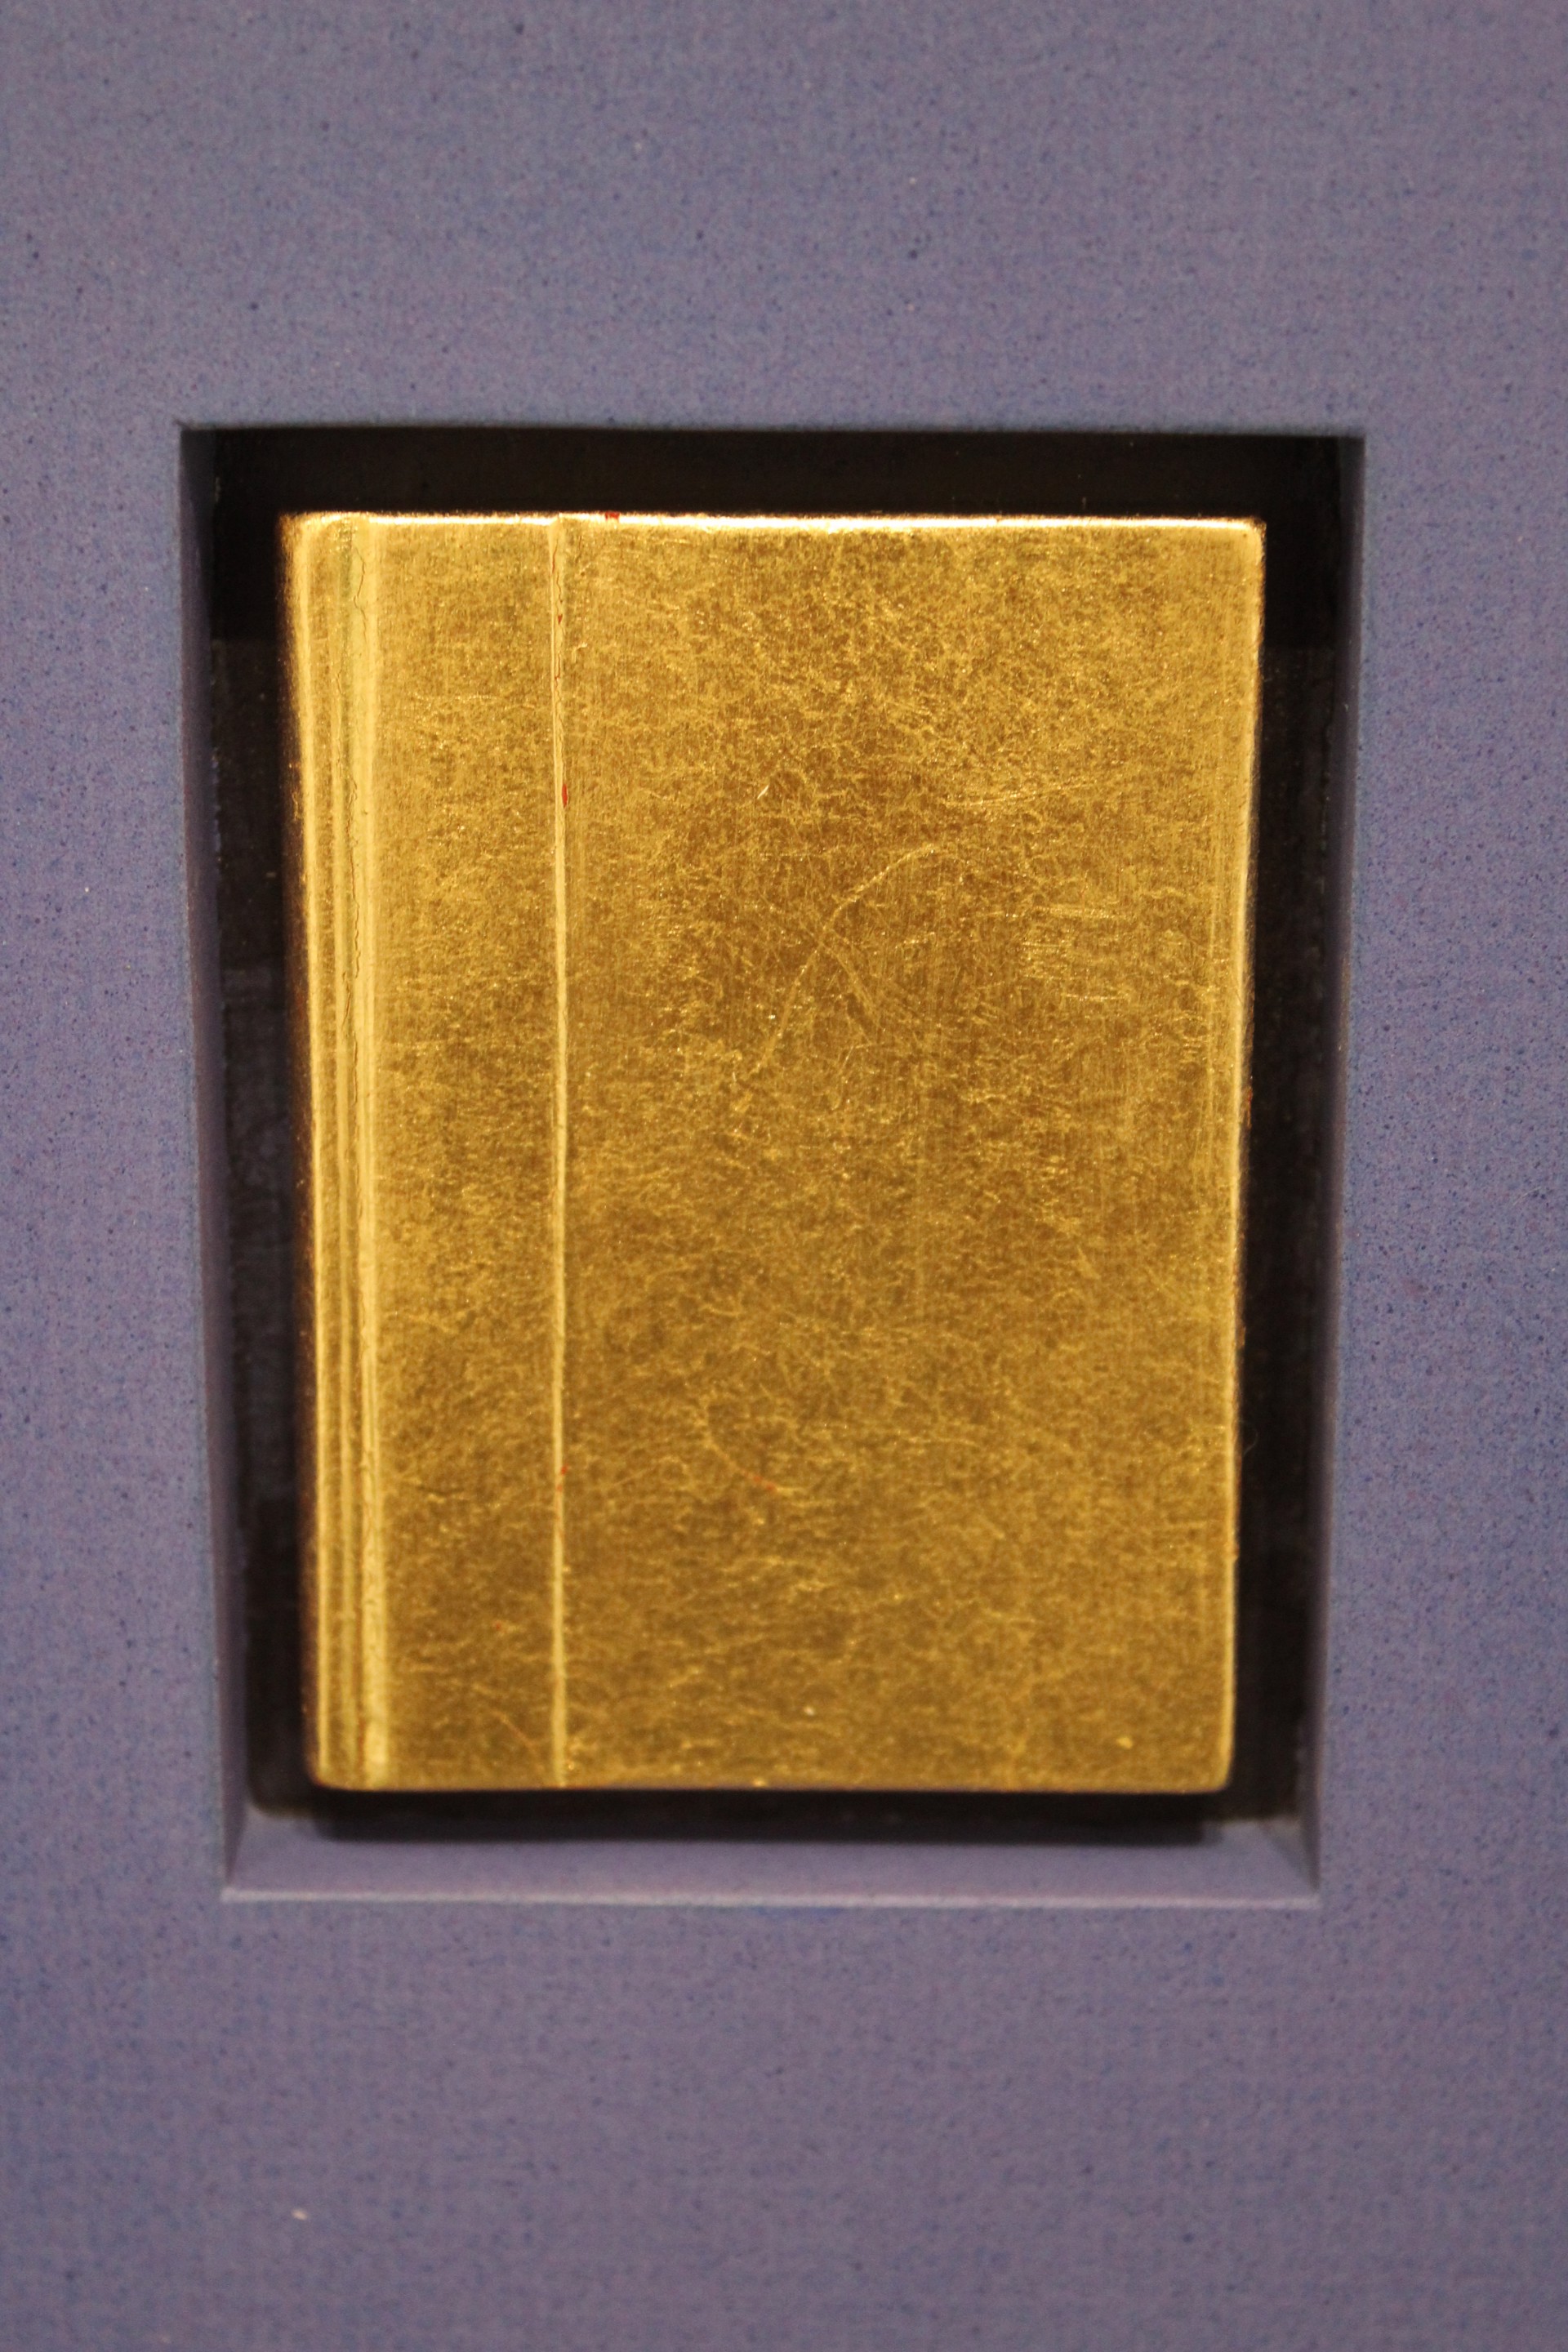 Little Golden Book by Sean O'Meallie